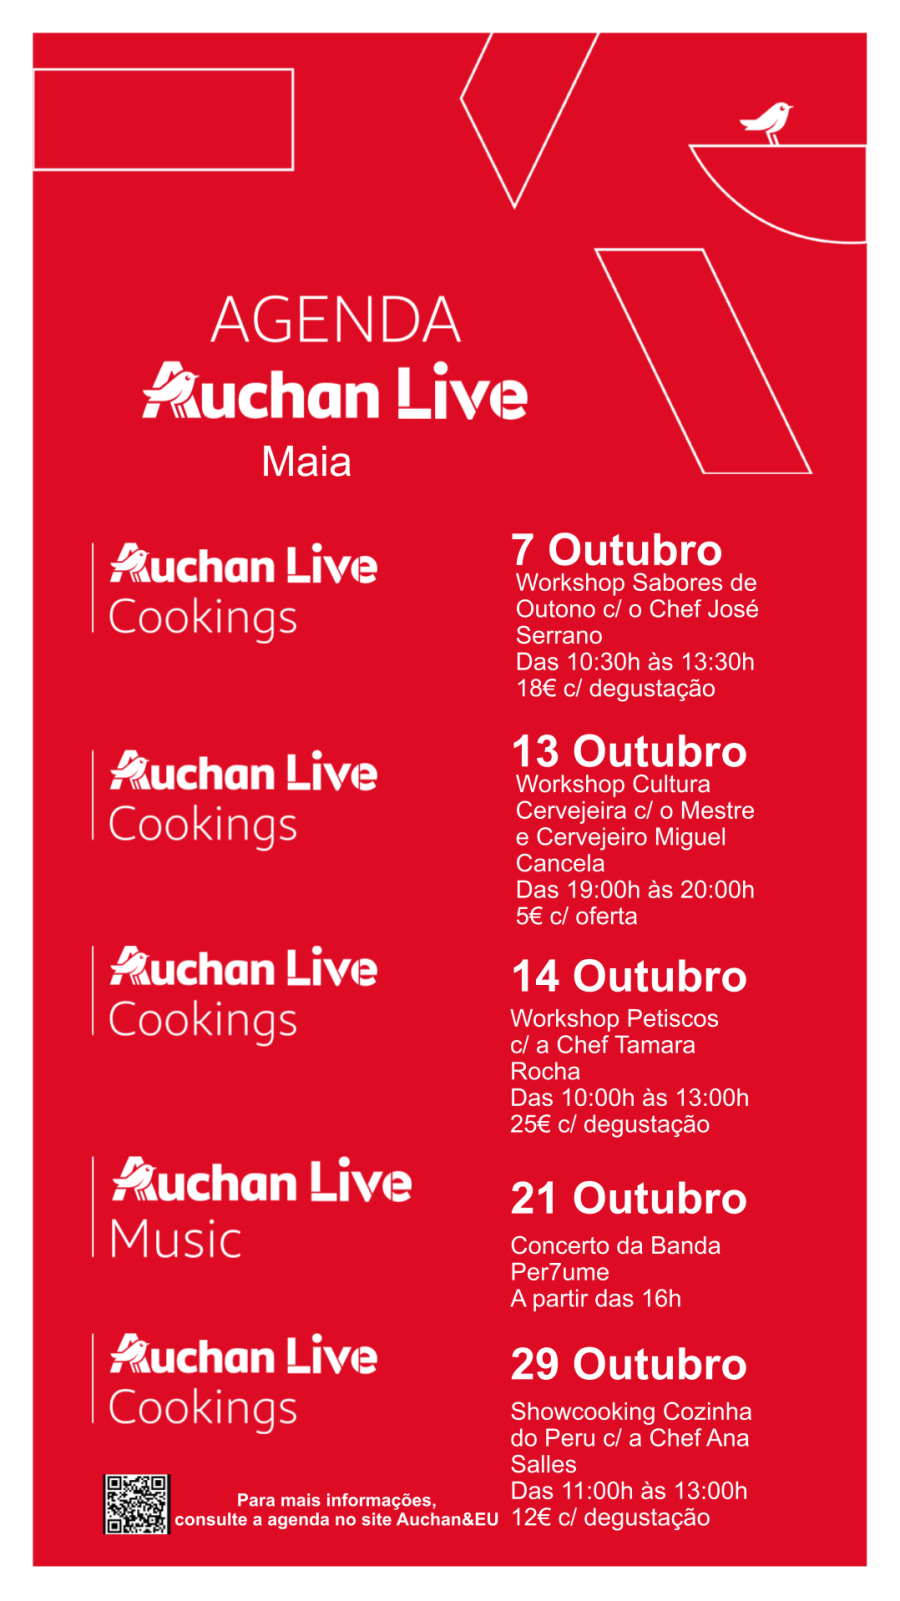 Agenda Academia Auchan Live da Maia